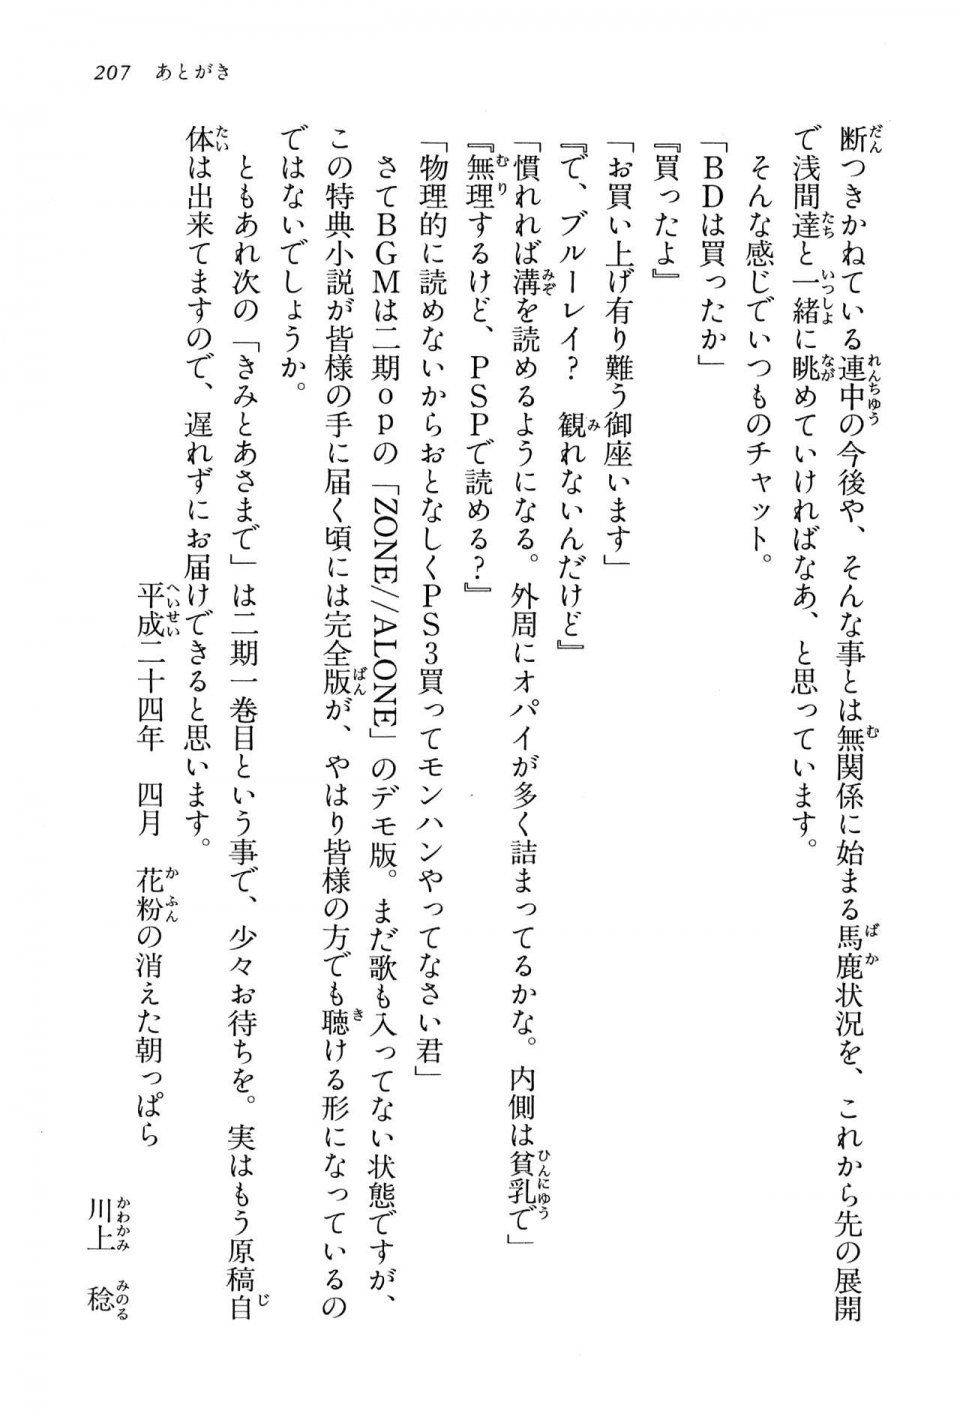 Kyoukai Senjou no Horizon BD Special Mininovel Vol 4(2B) - Photo #211